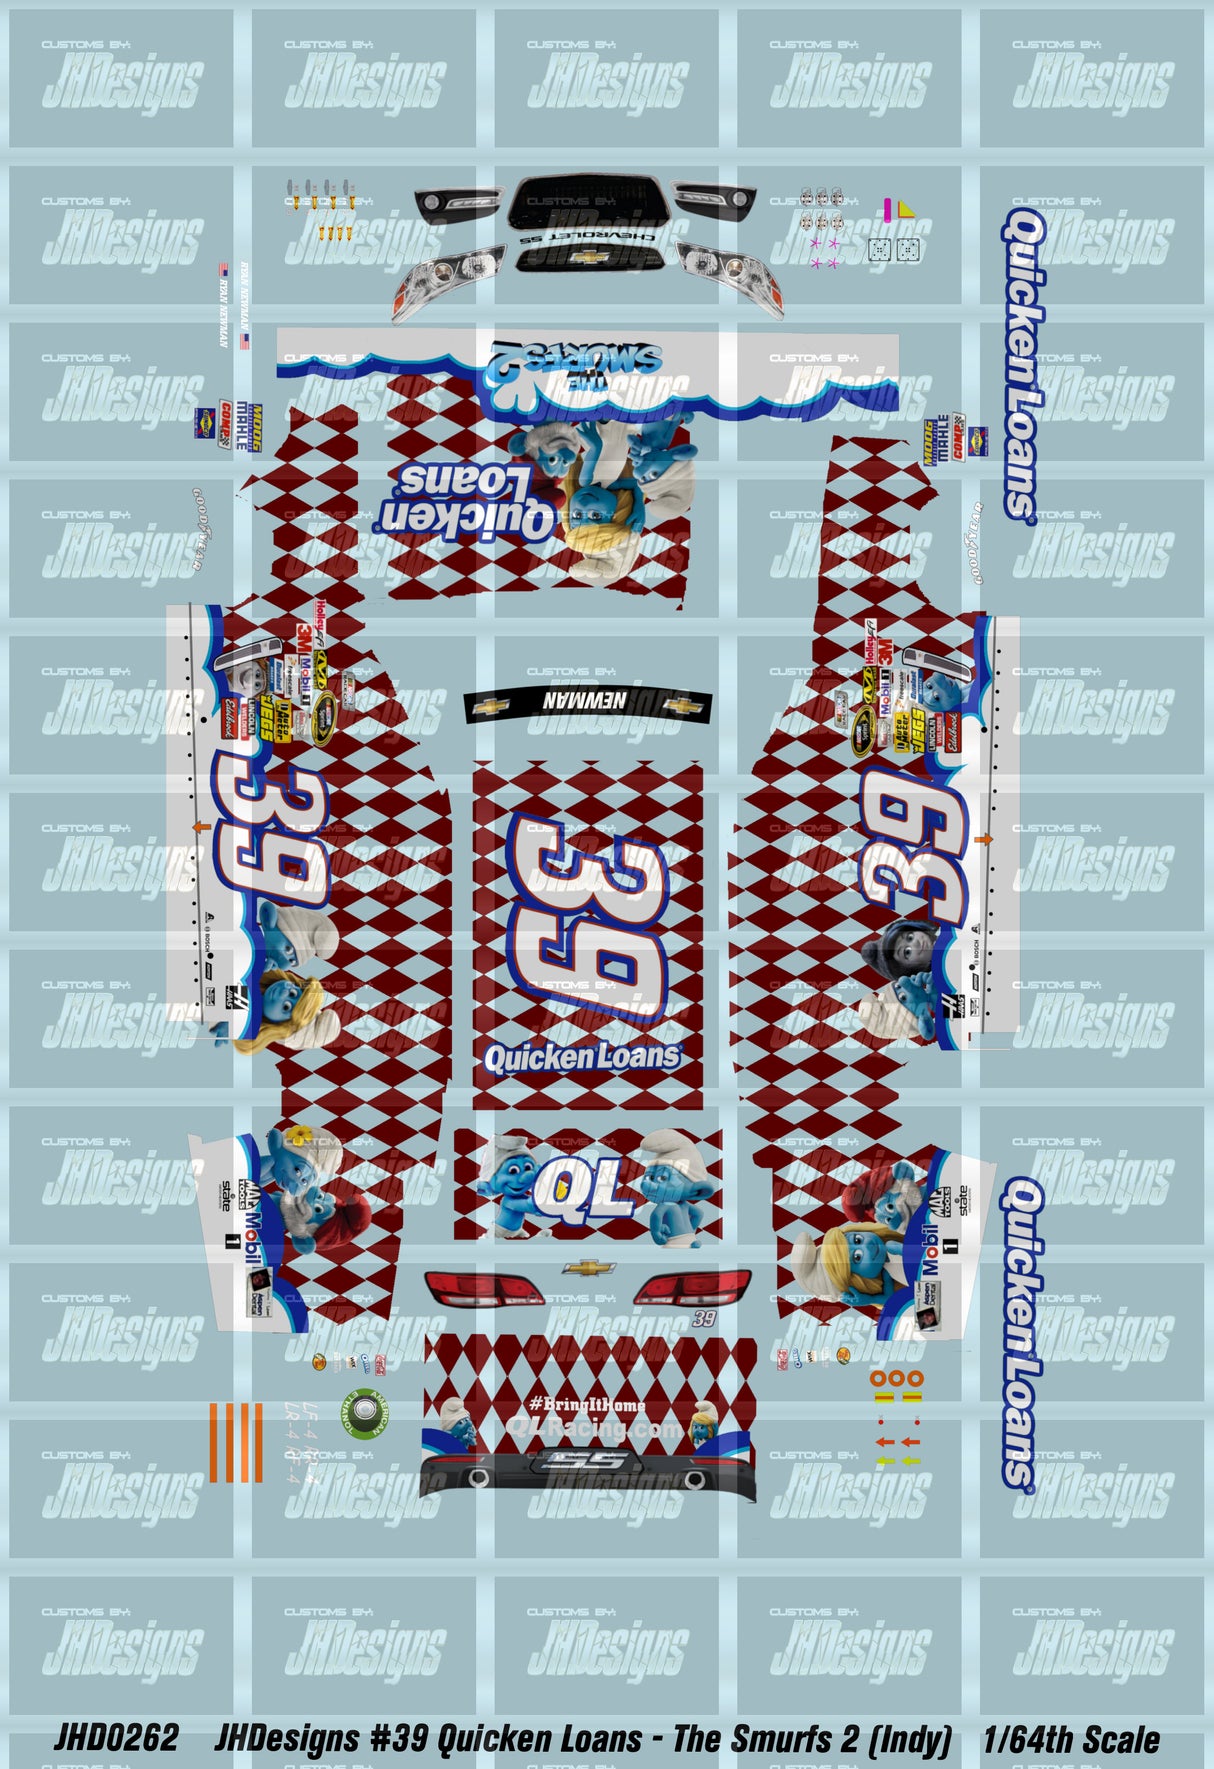 JH Designs Ryan Newman 2013 CUP #39 Quicken Loans - The Smurfs 2 (Indy Race Win) 1:64 Racecar Decal Set